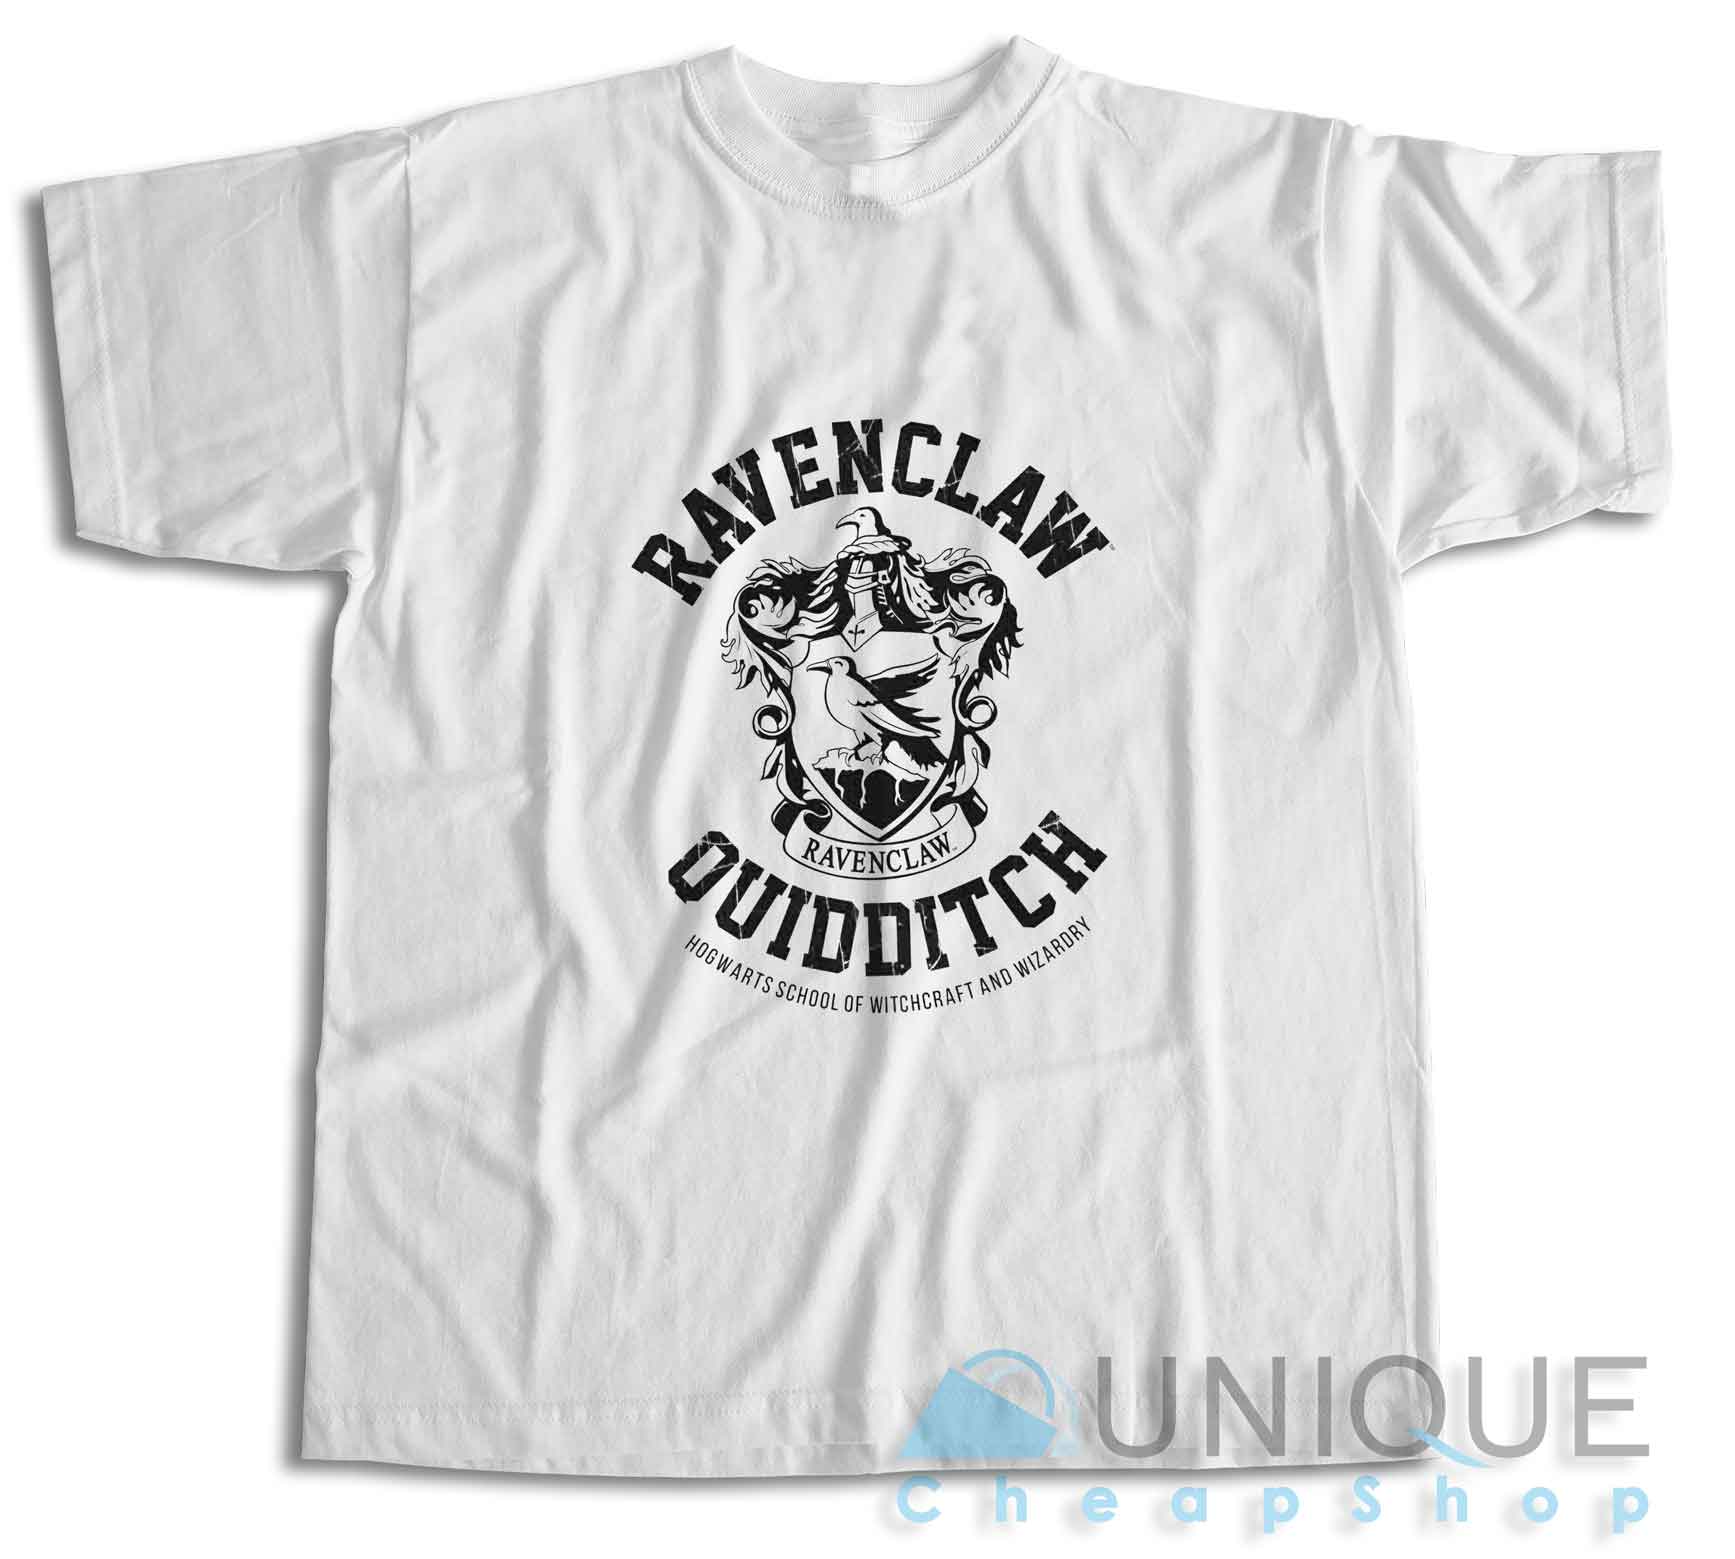 Harry Potter Ravenclaw Quidditch T-Shirt Color White